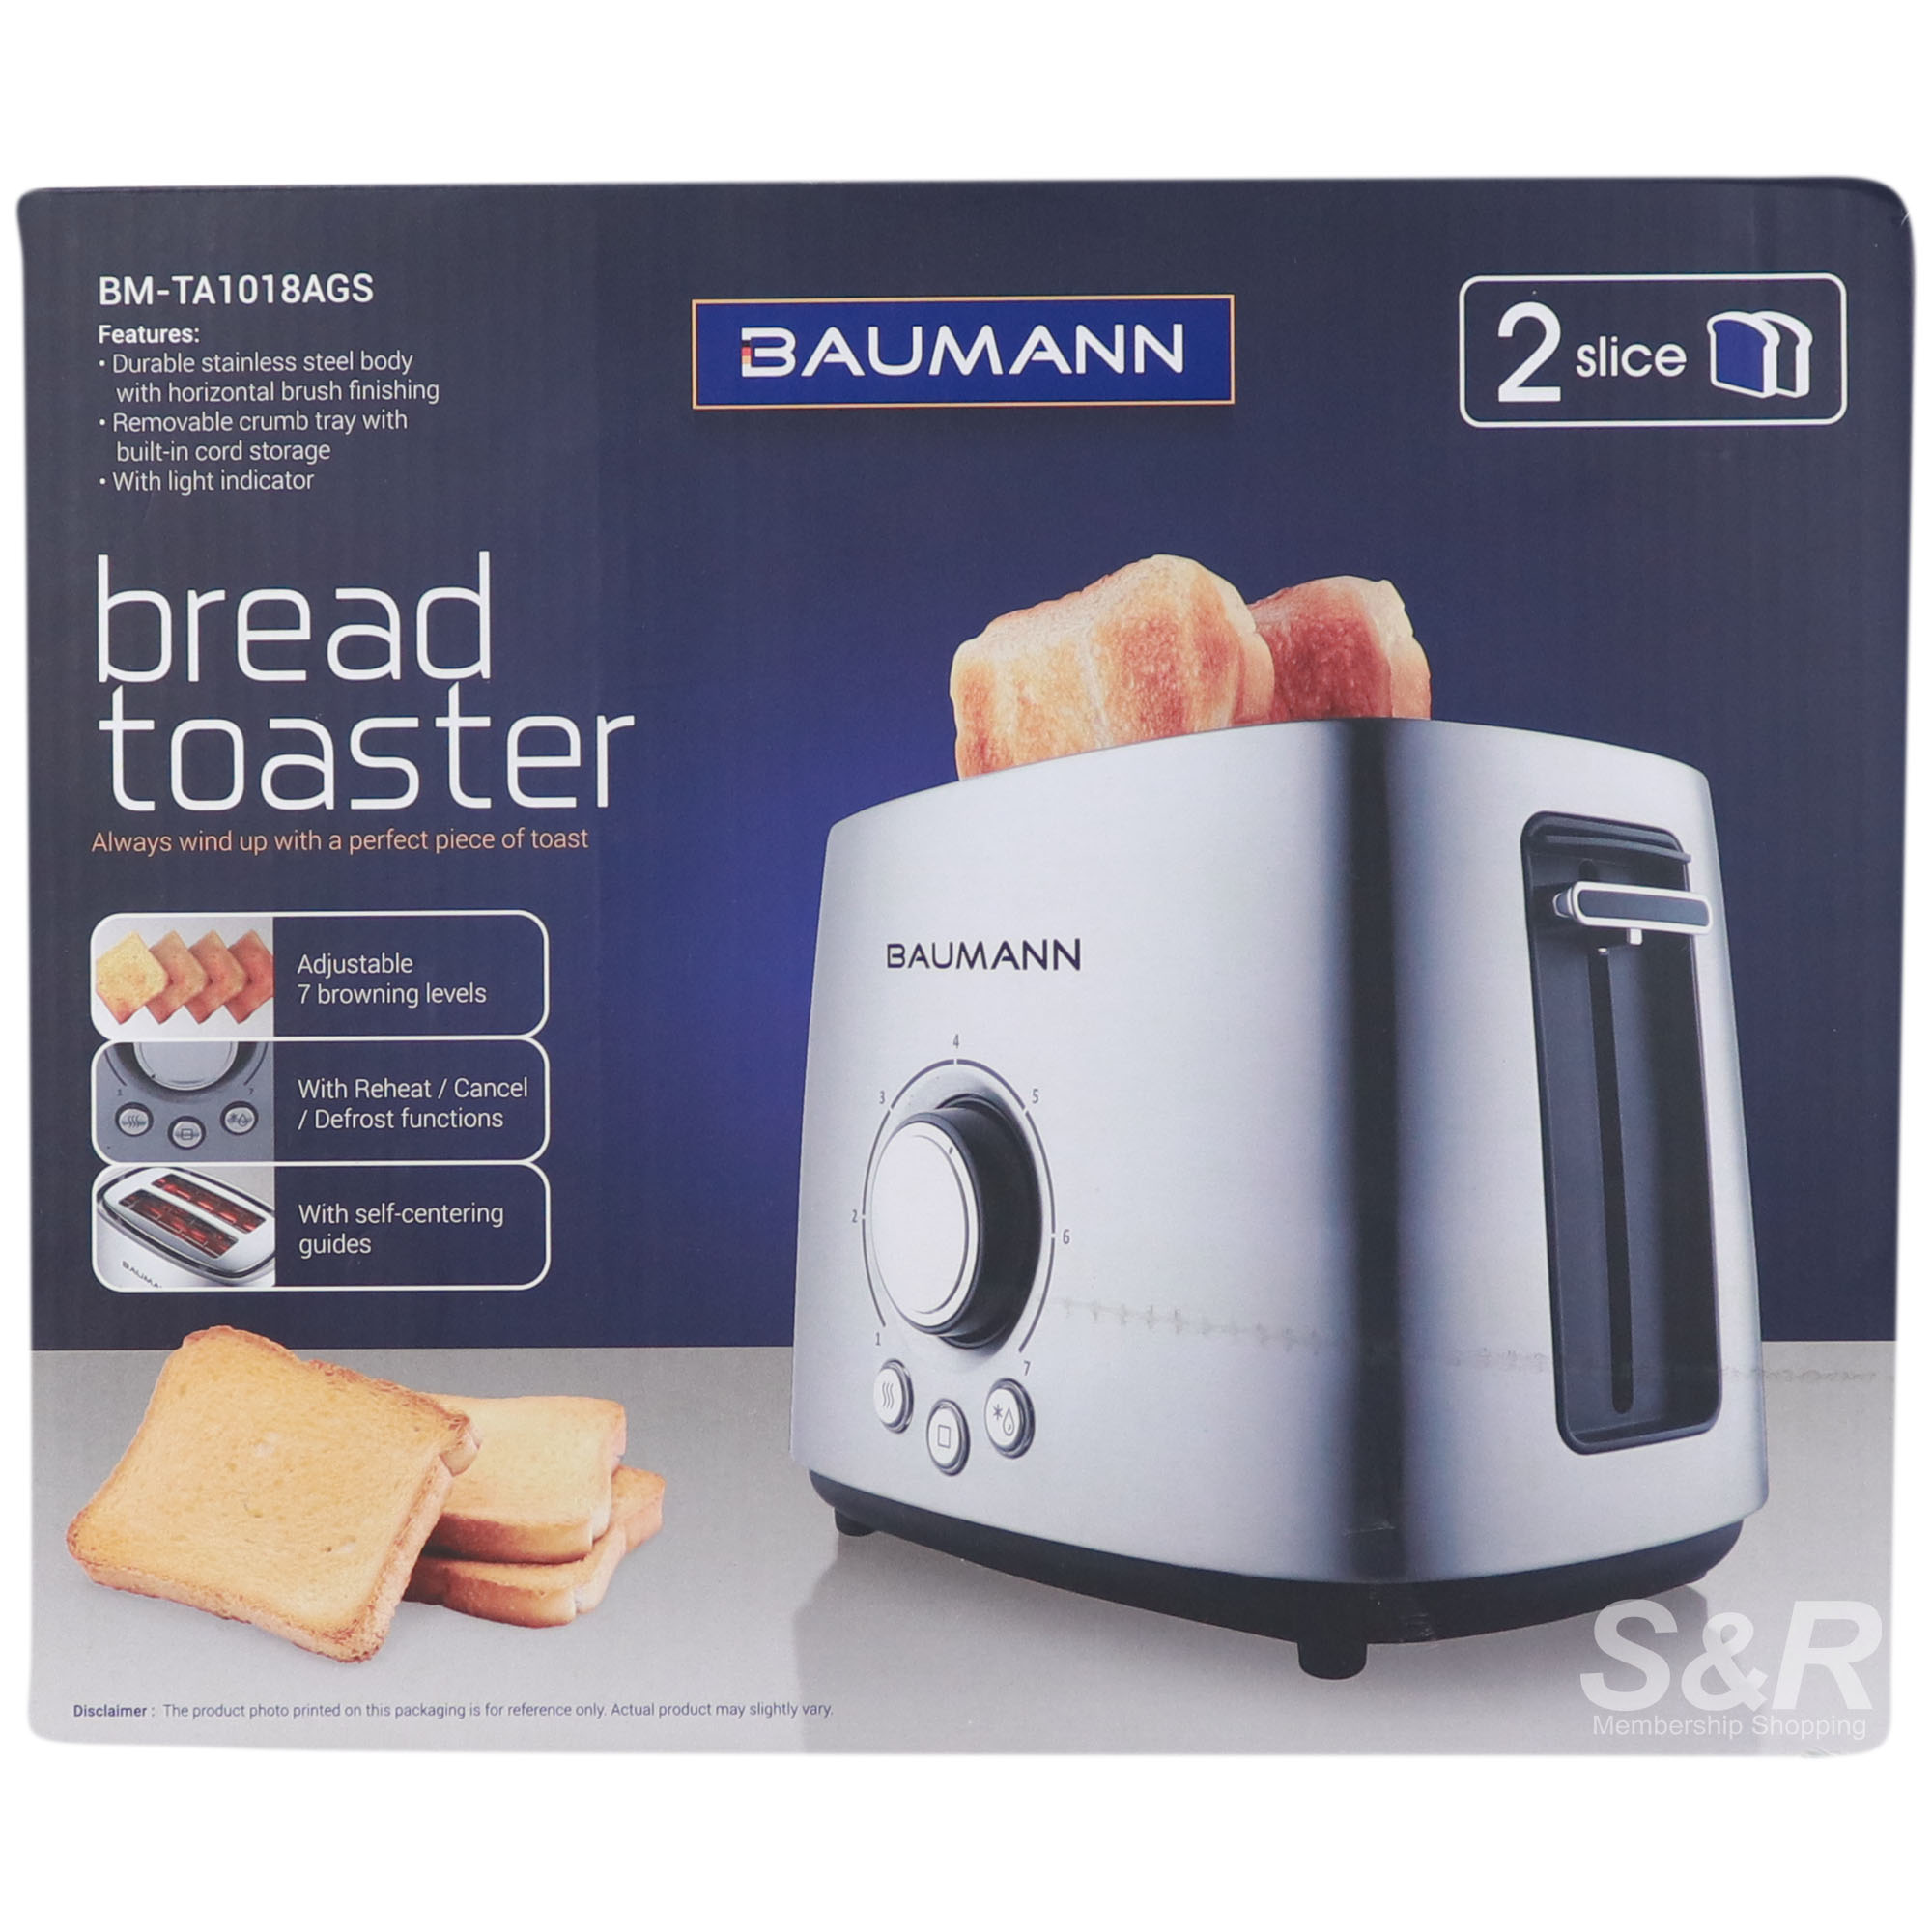 Baumann 2 slice Bread Toaster BM-TA1018AGS